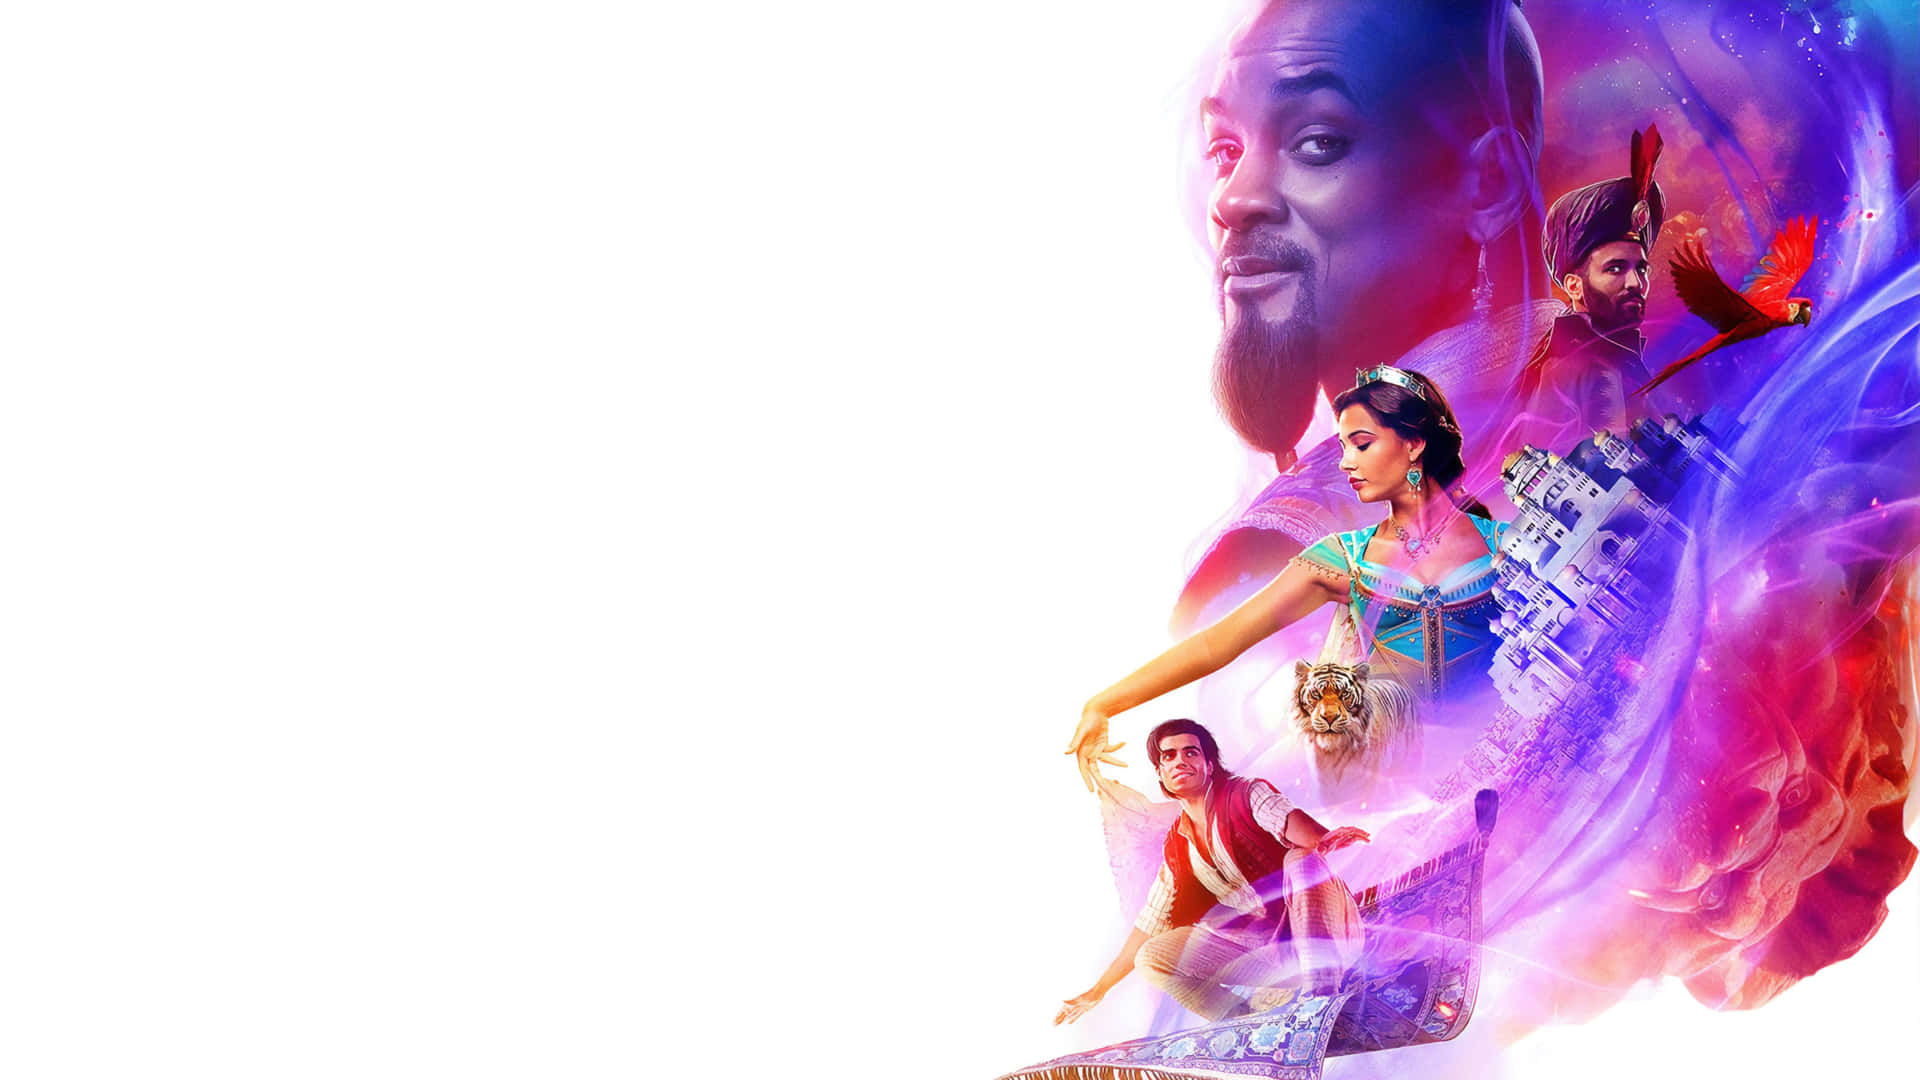 Lilaoch Rosa Aladdin 1440p Disney Bakgrund.